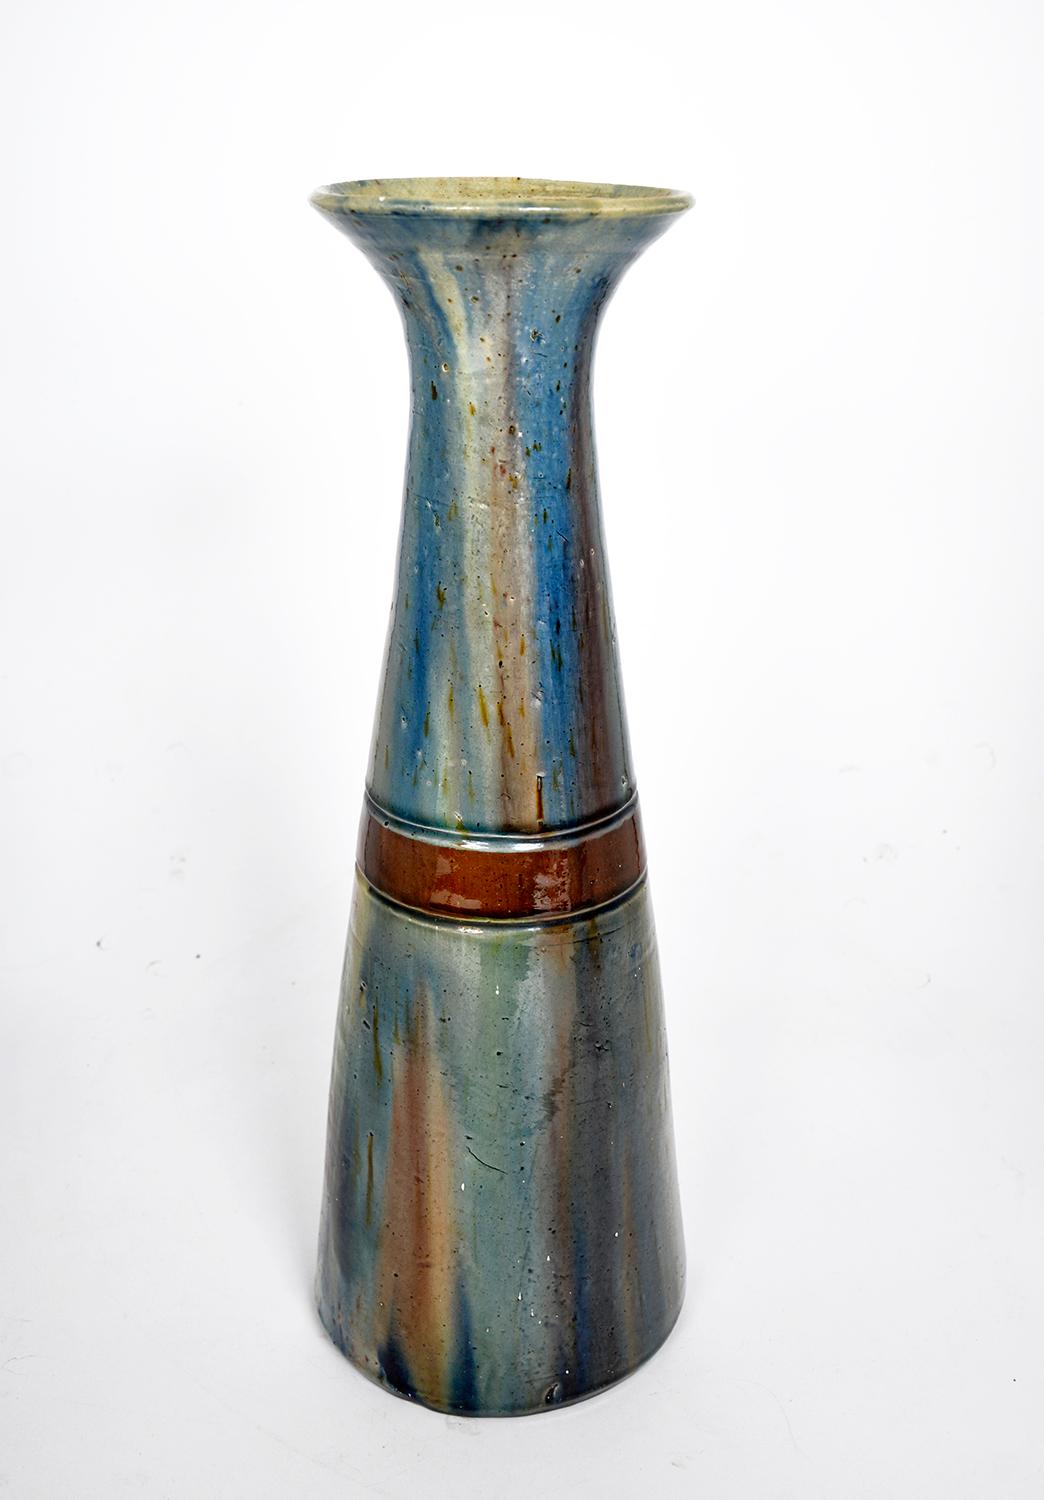 Flemish Studio Pottery Art Nouveau Drip Glazed Earthenware Vase 1900s Folk Art In Good Condition For Sale In Sherborne, Dorset